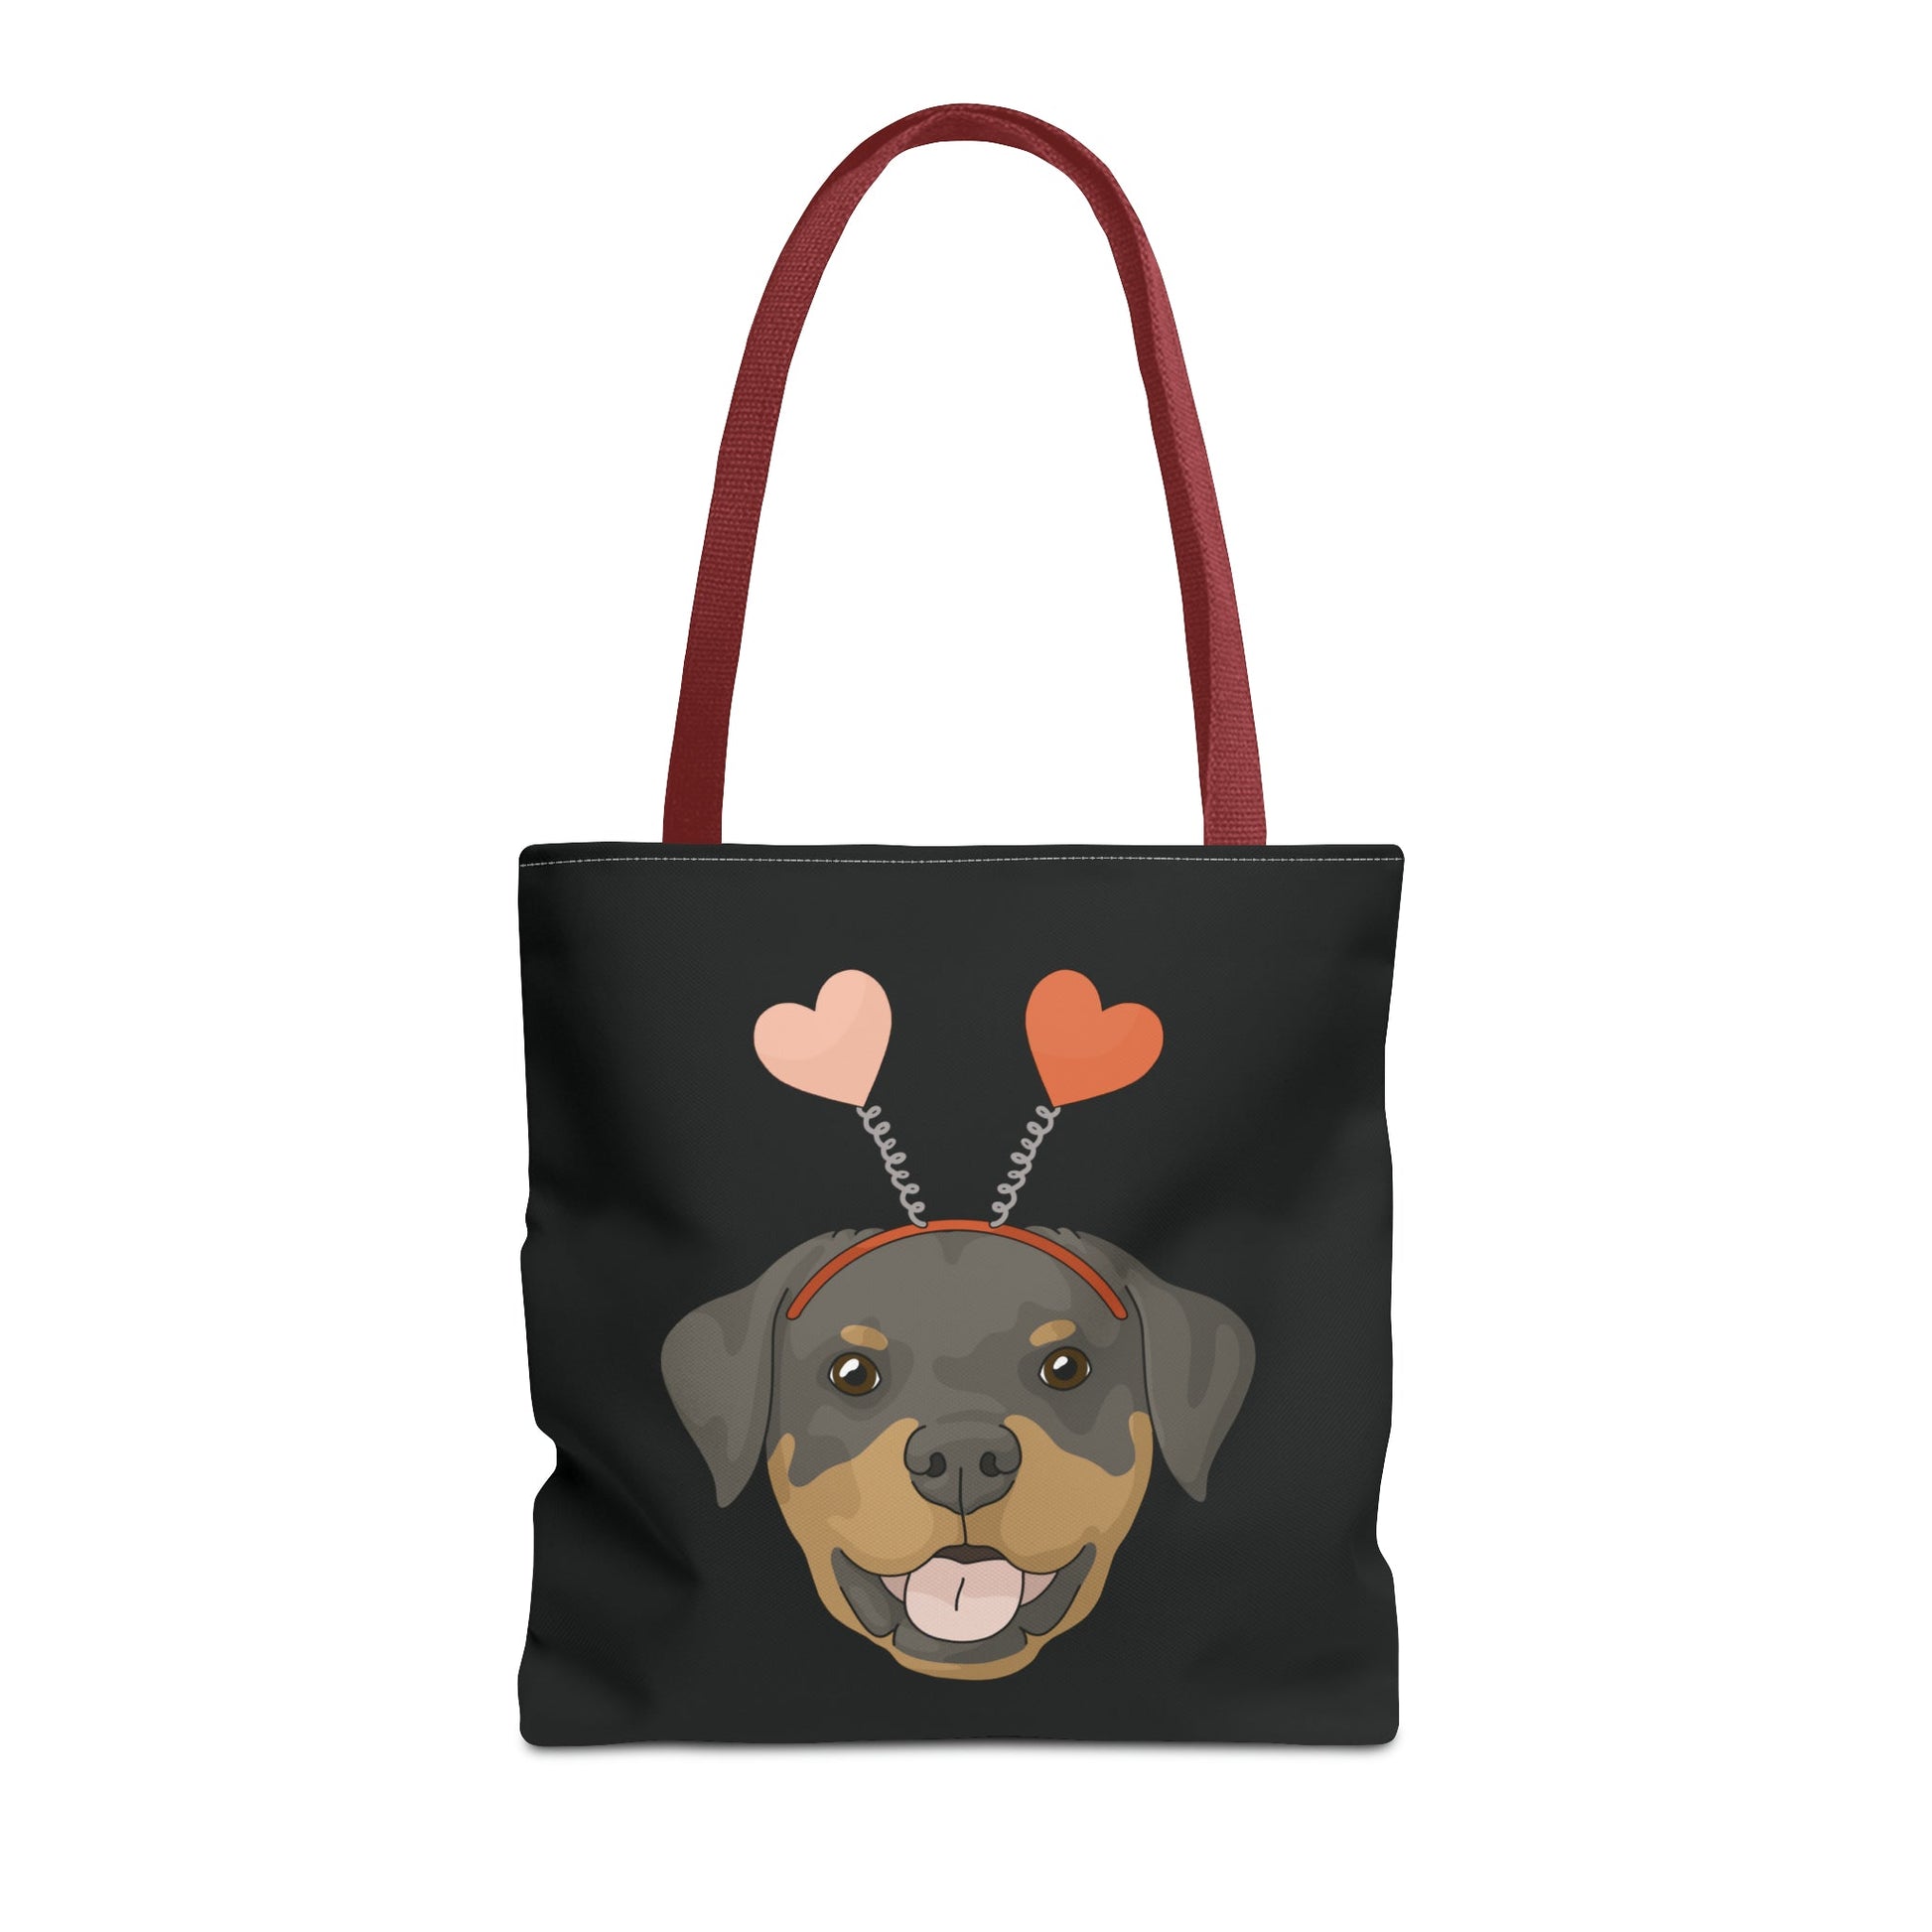 A Very Rottie Valentine | Tote Bag - Detezi Designs-66328703570817848338